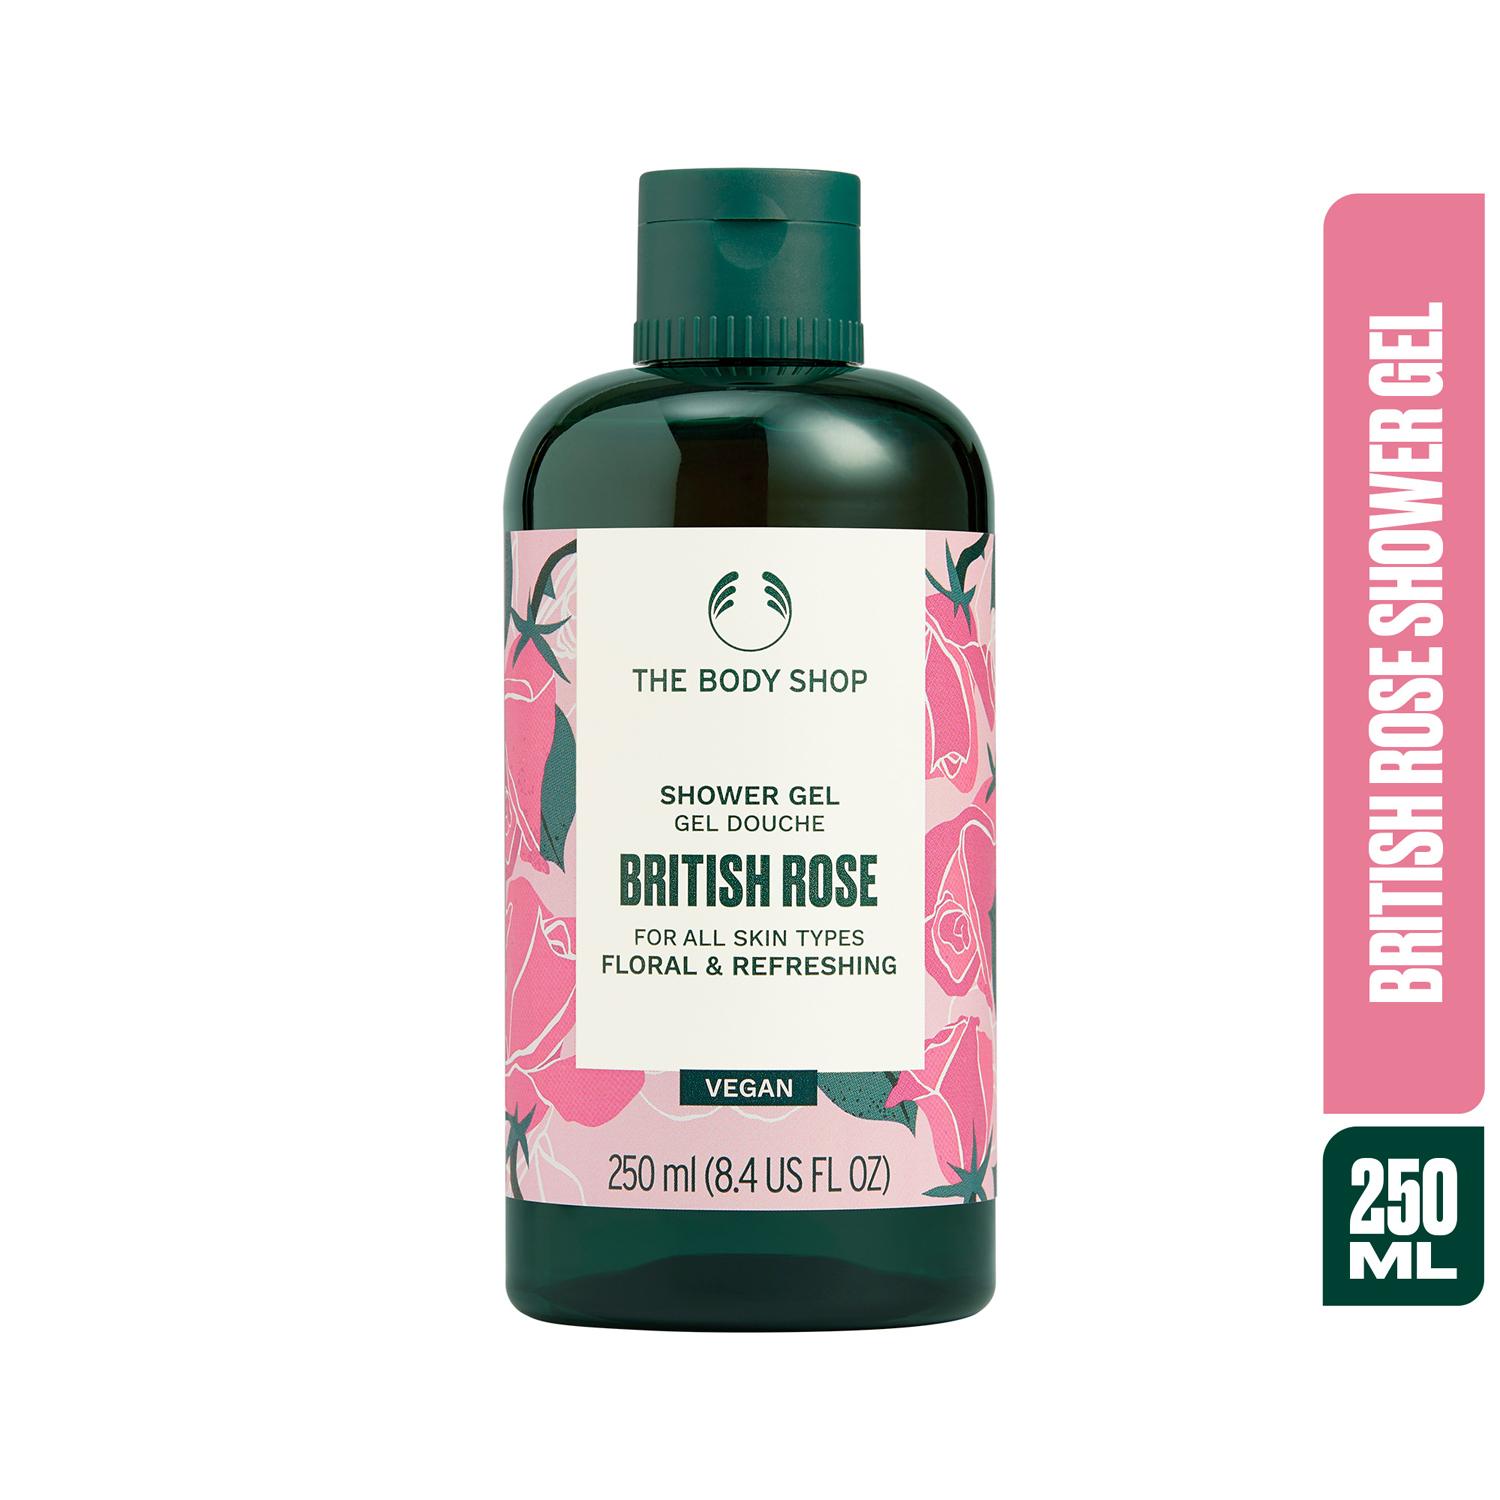 The Body Shop | The Body Shop British Rose Shower Gel (250ml)